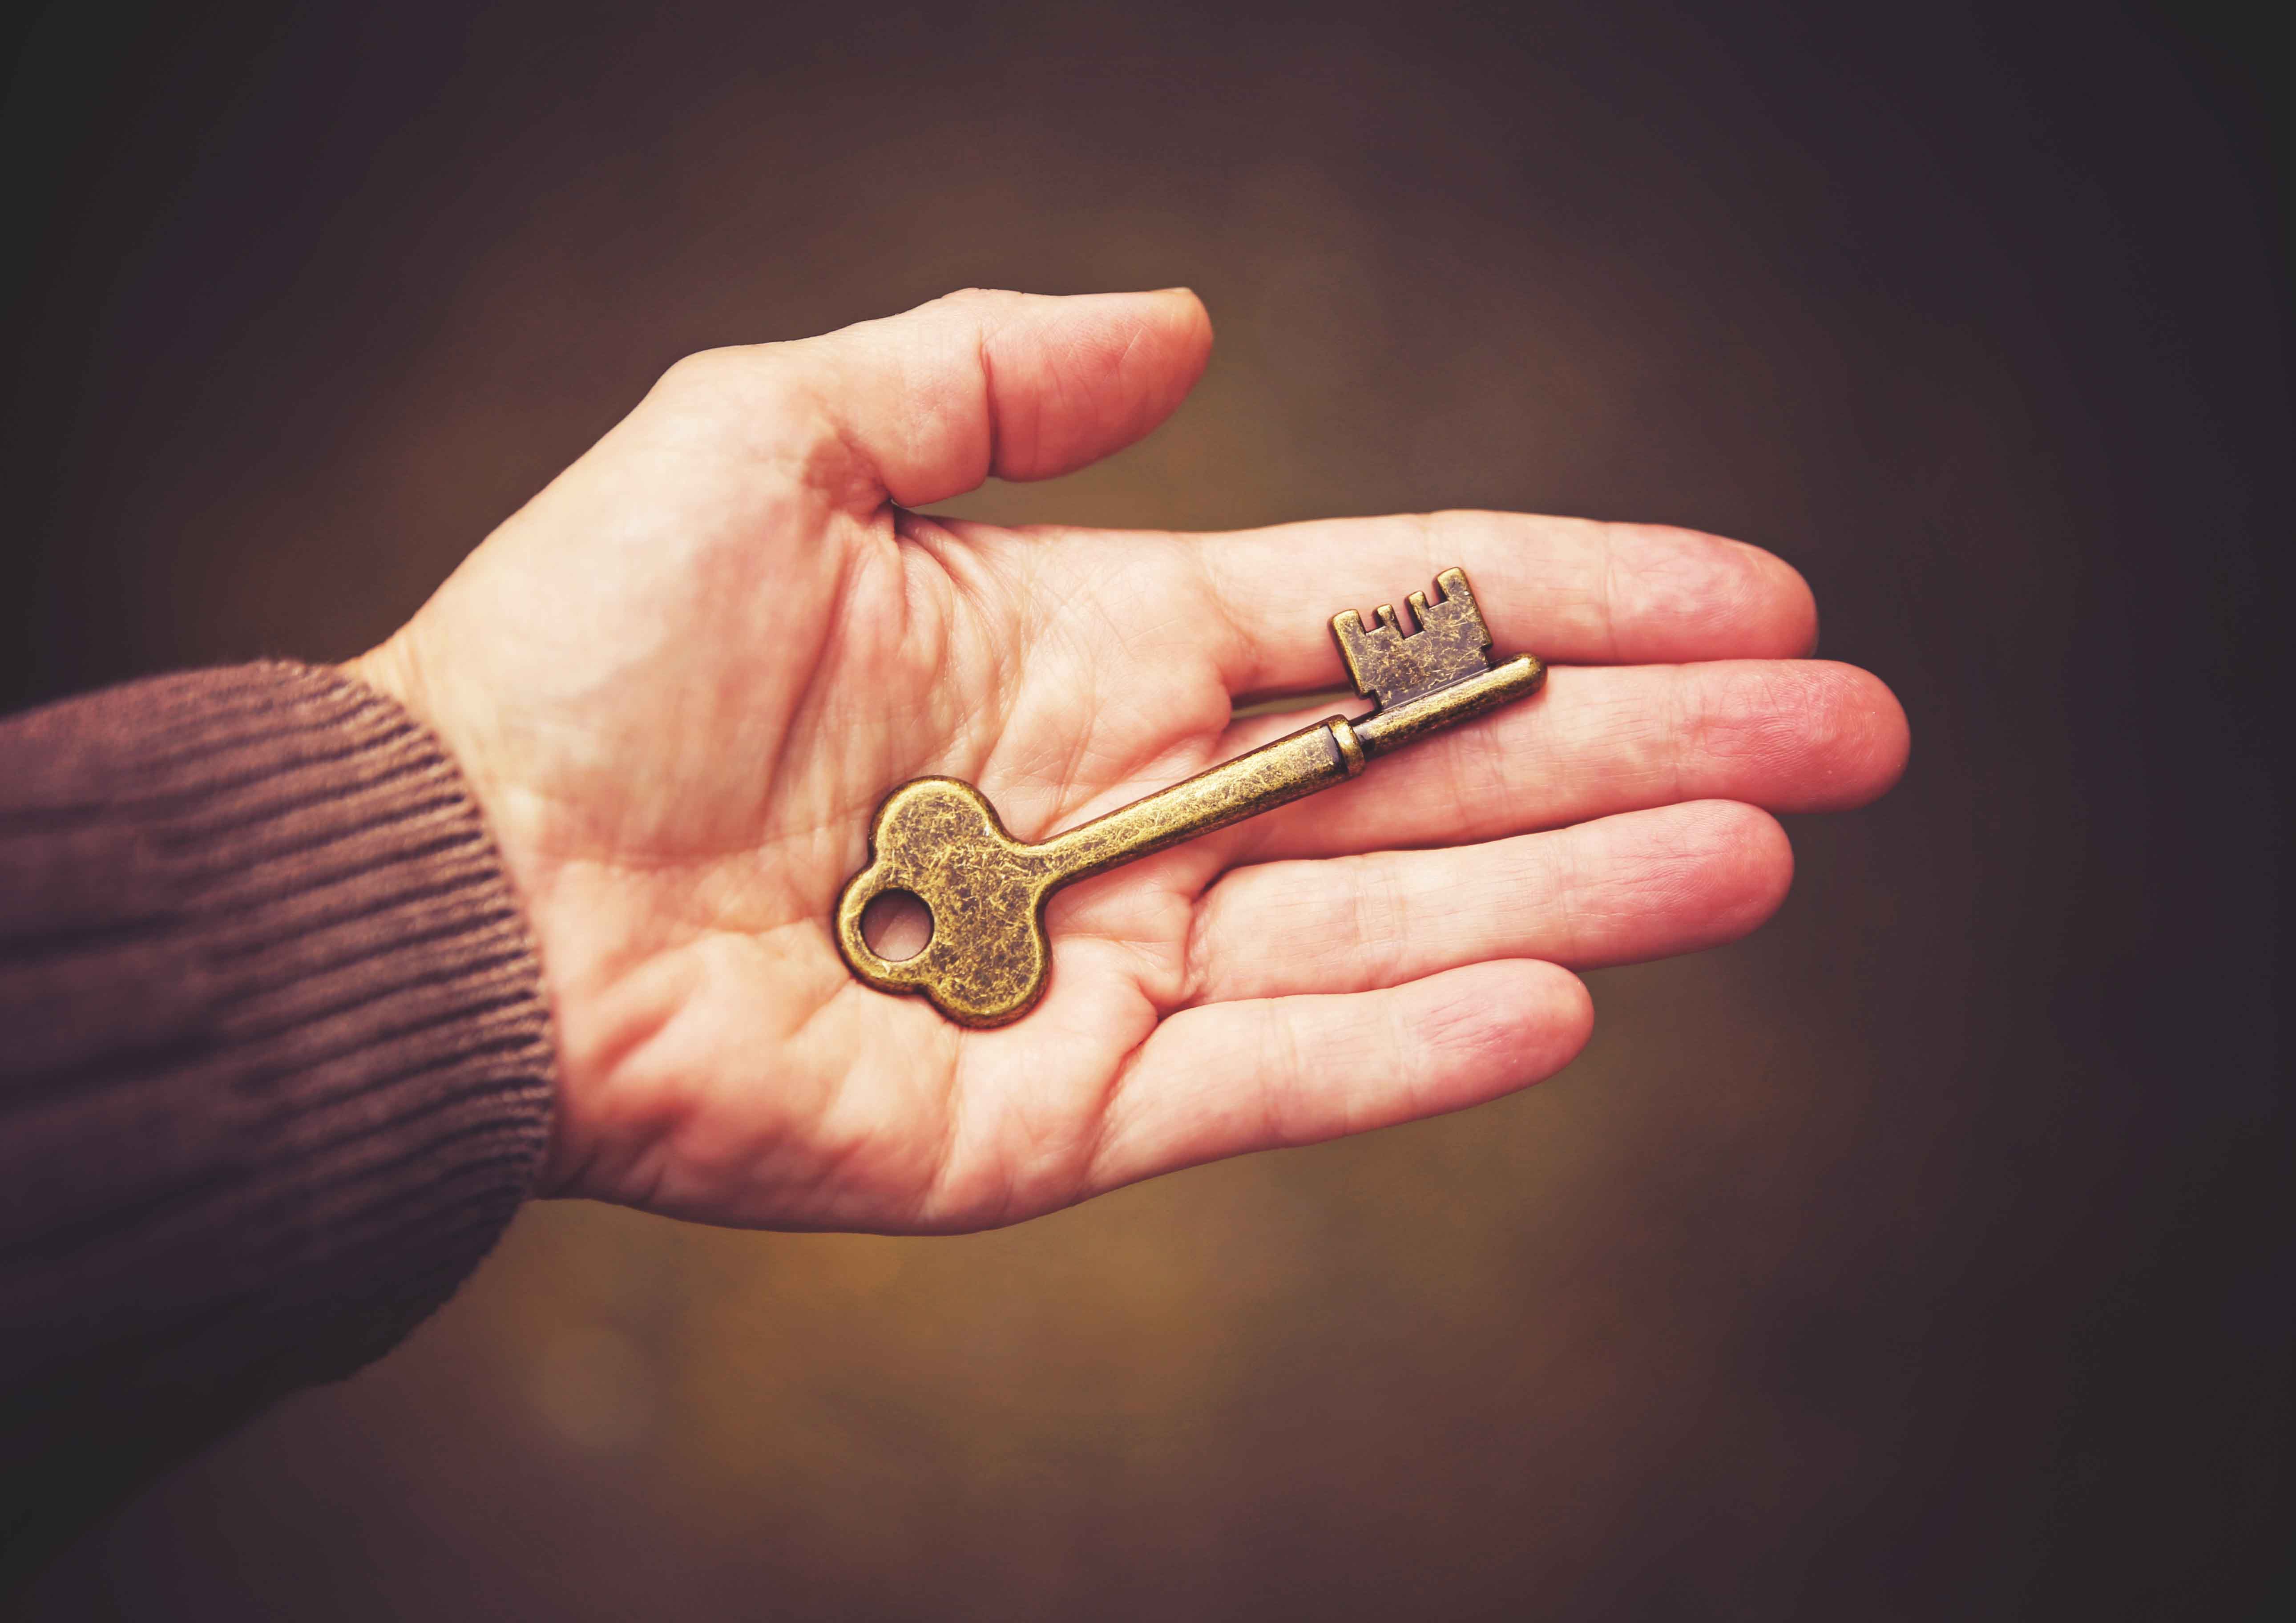 Keys picture. Ключ. Ключ в руке. Красивый ключ в руке. Старинный ключ.